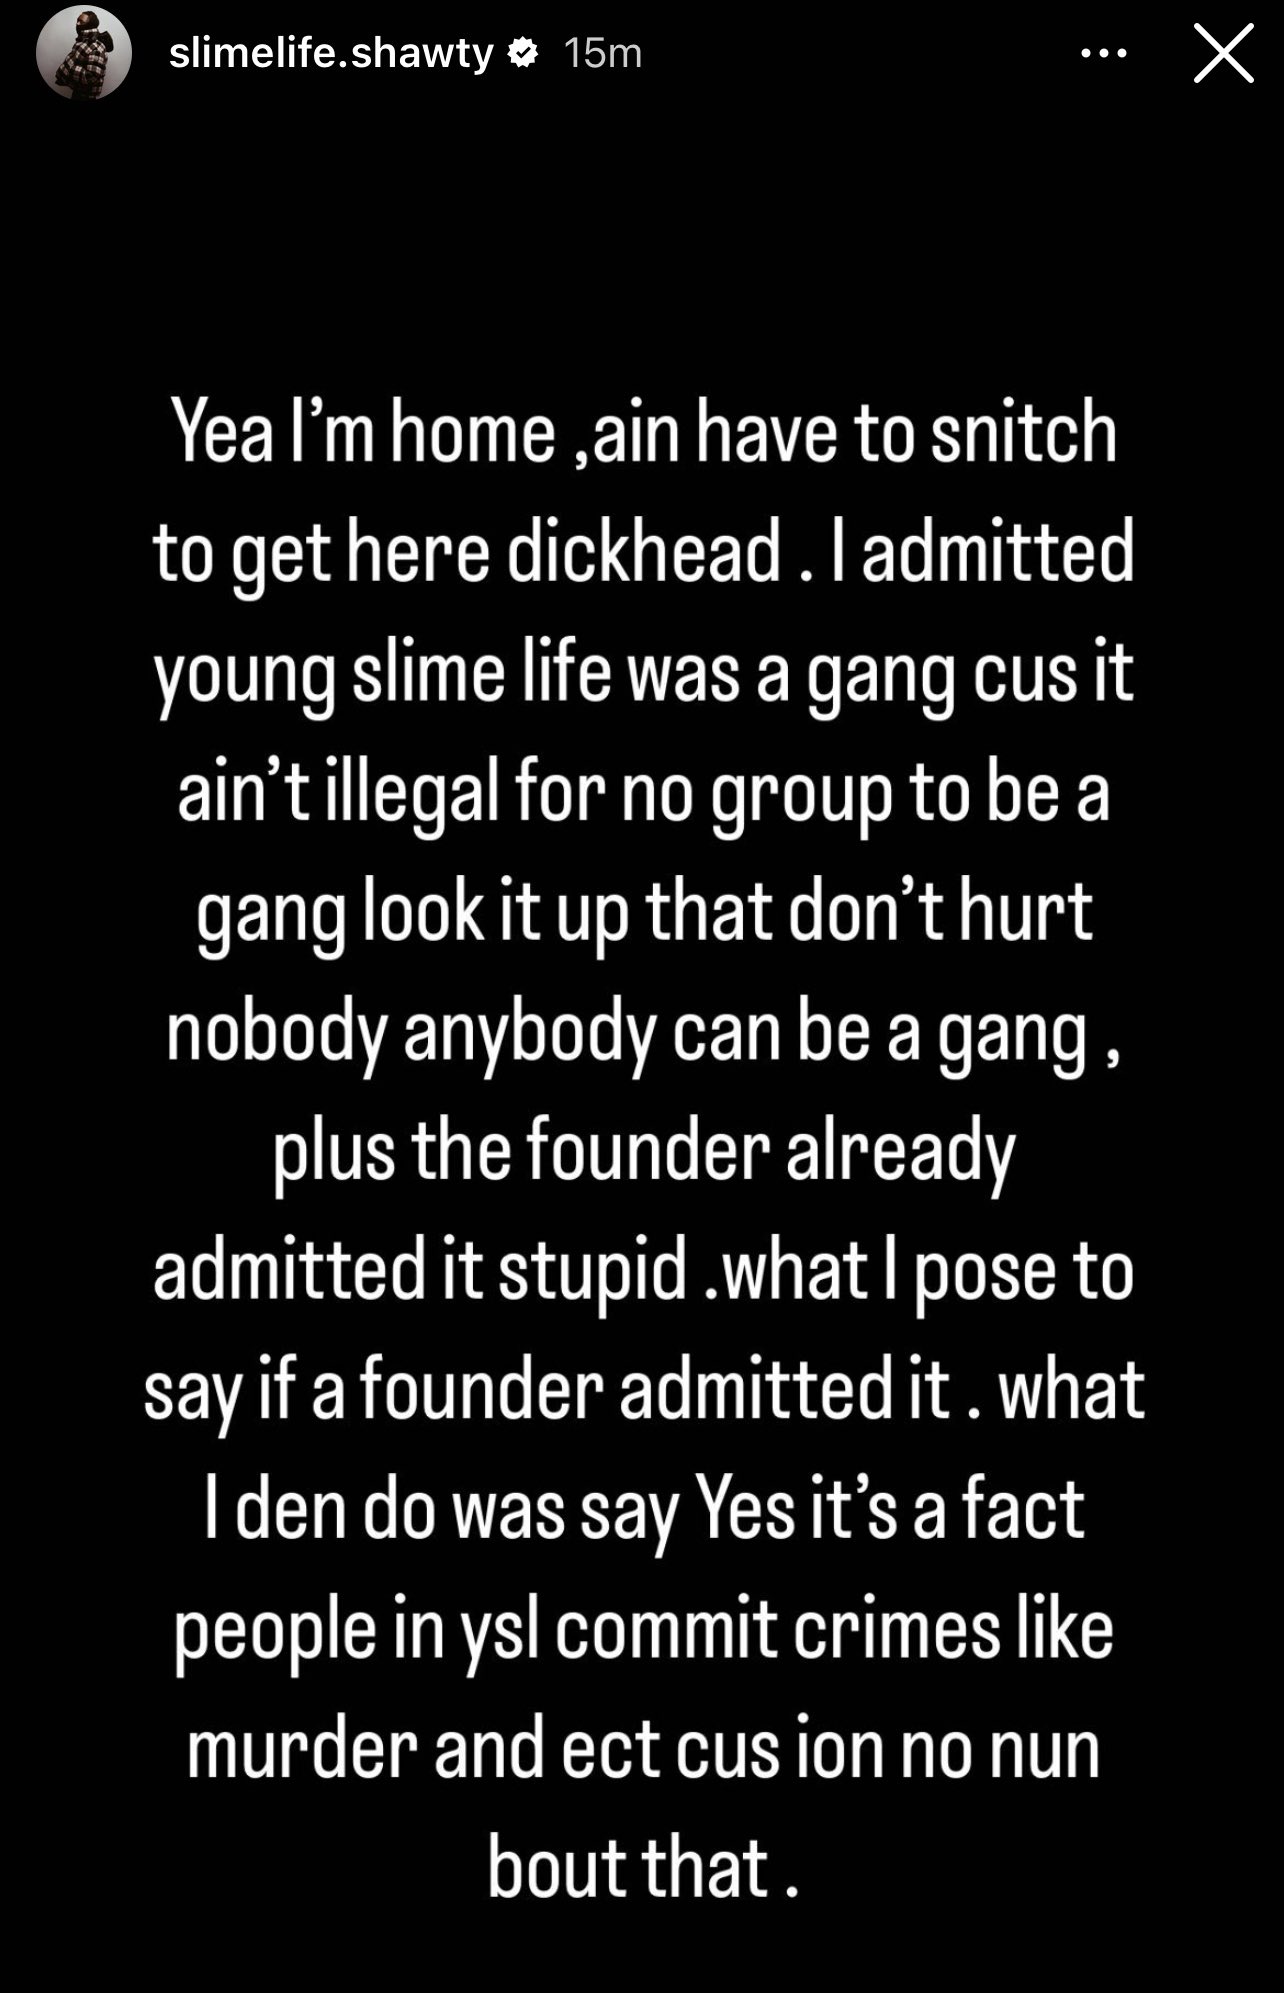 Kollege Kidd on X: Slimelife Shawty claims he ain't a snitch   / X